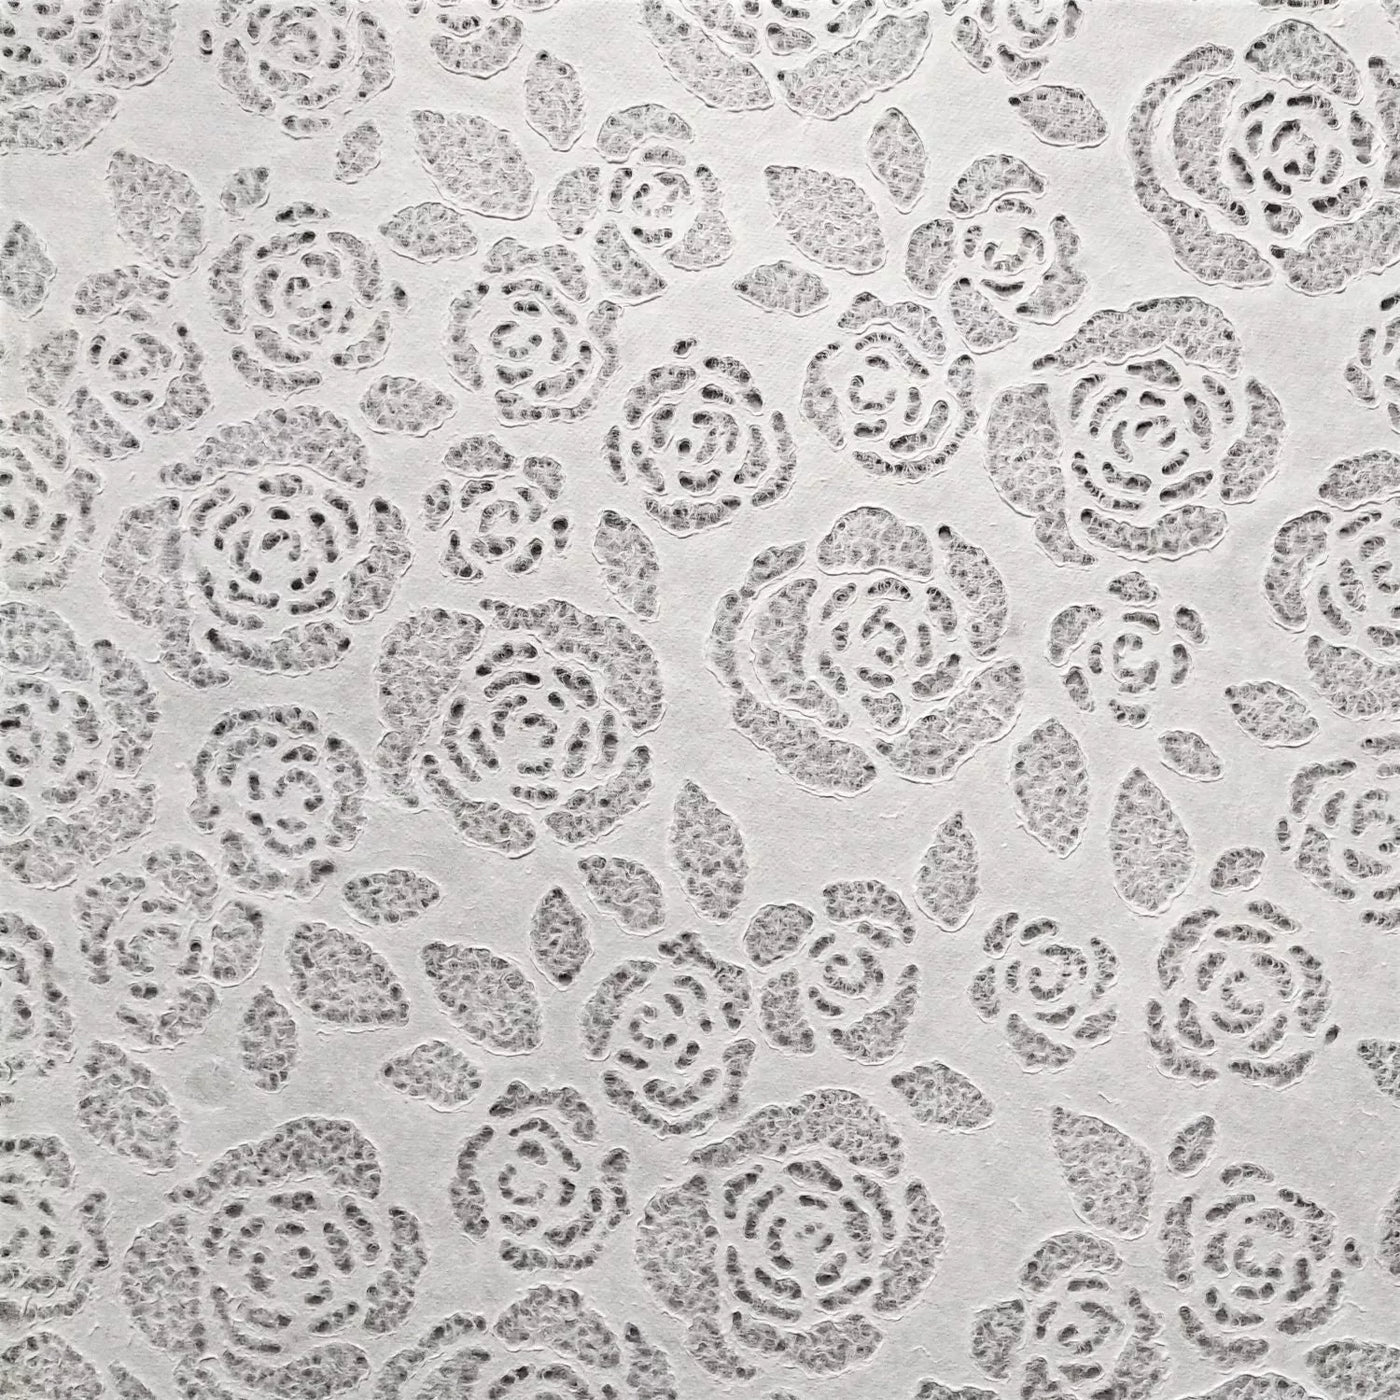 Handmade Lace Kozo Paper (Rose)